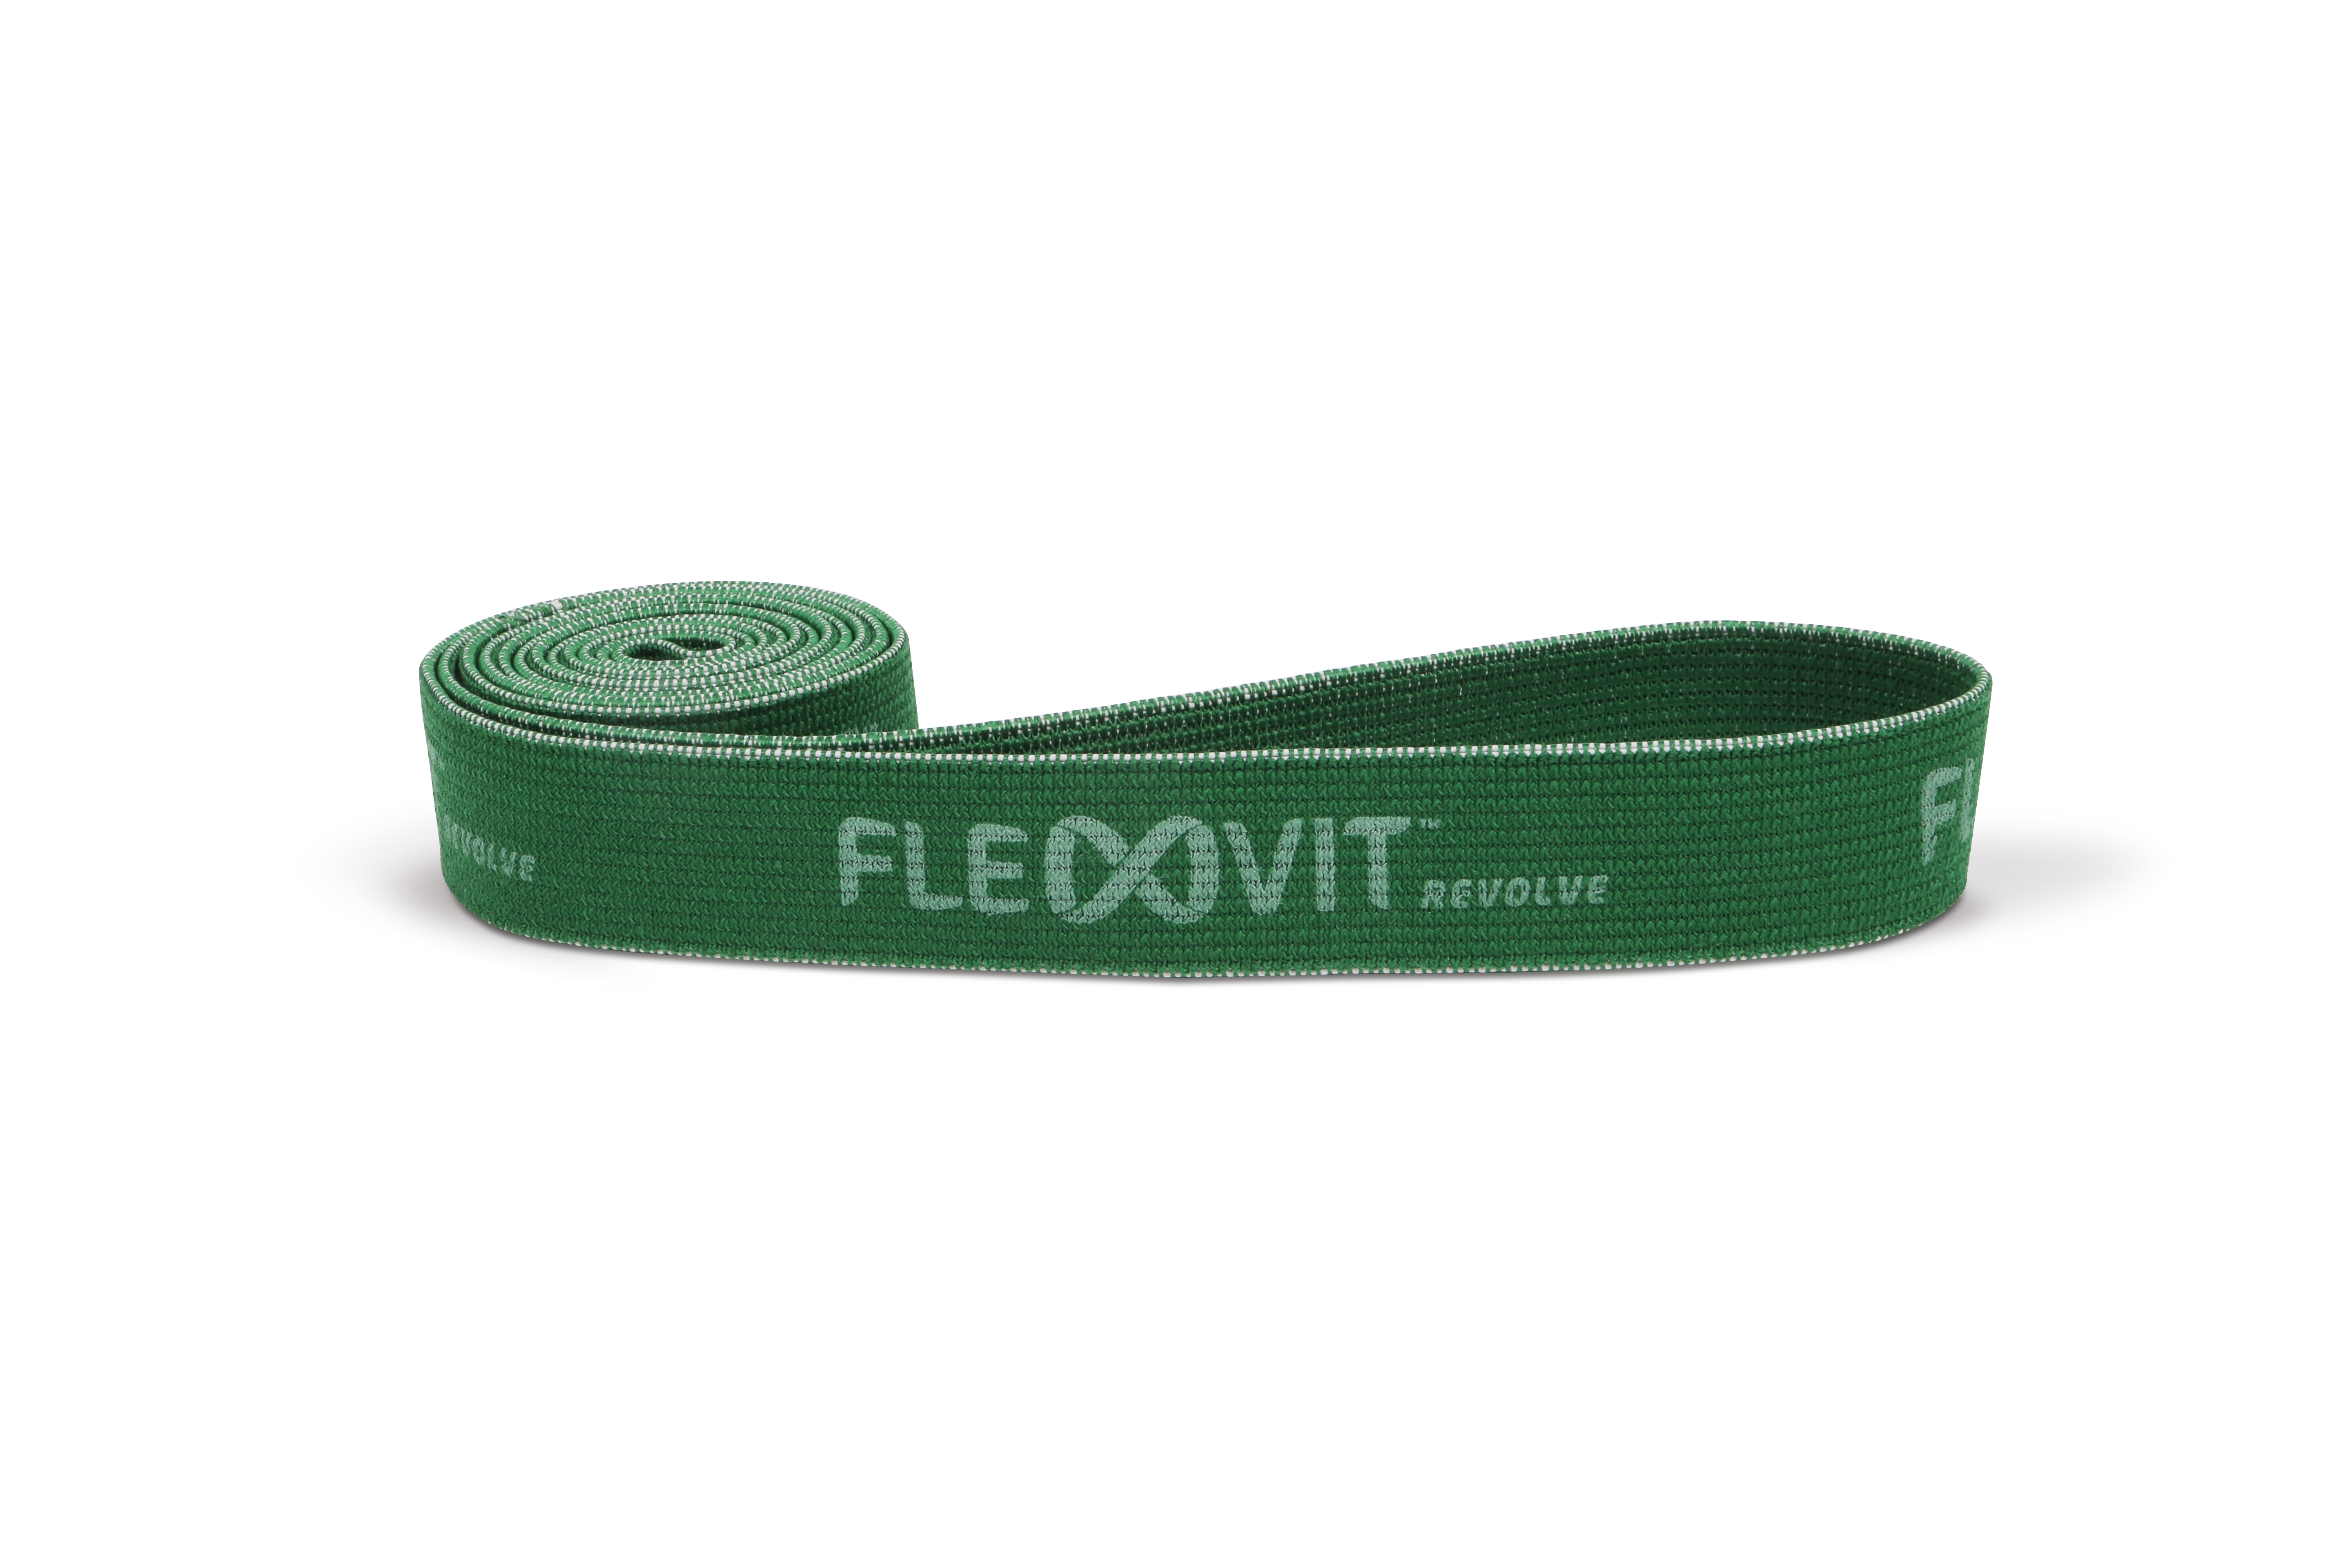 FLEXVIT Revolve Band - solid grün